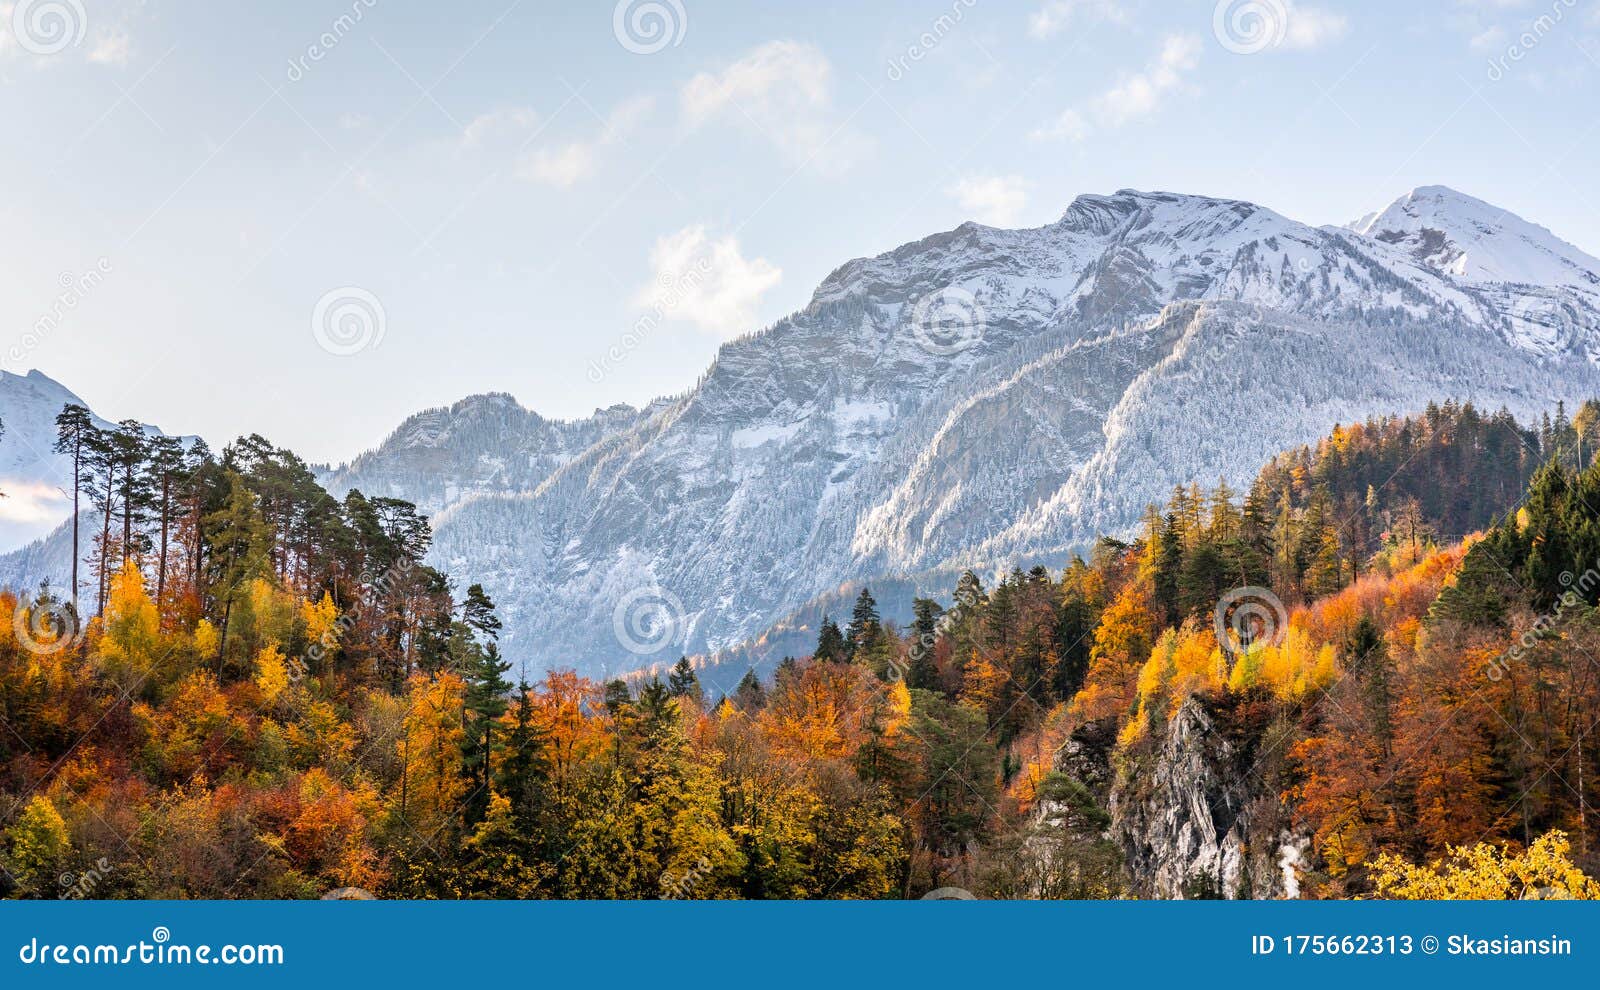 Snow Capped Mountain In Autumn Of Interlaken Switzerland Stock Image